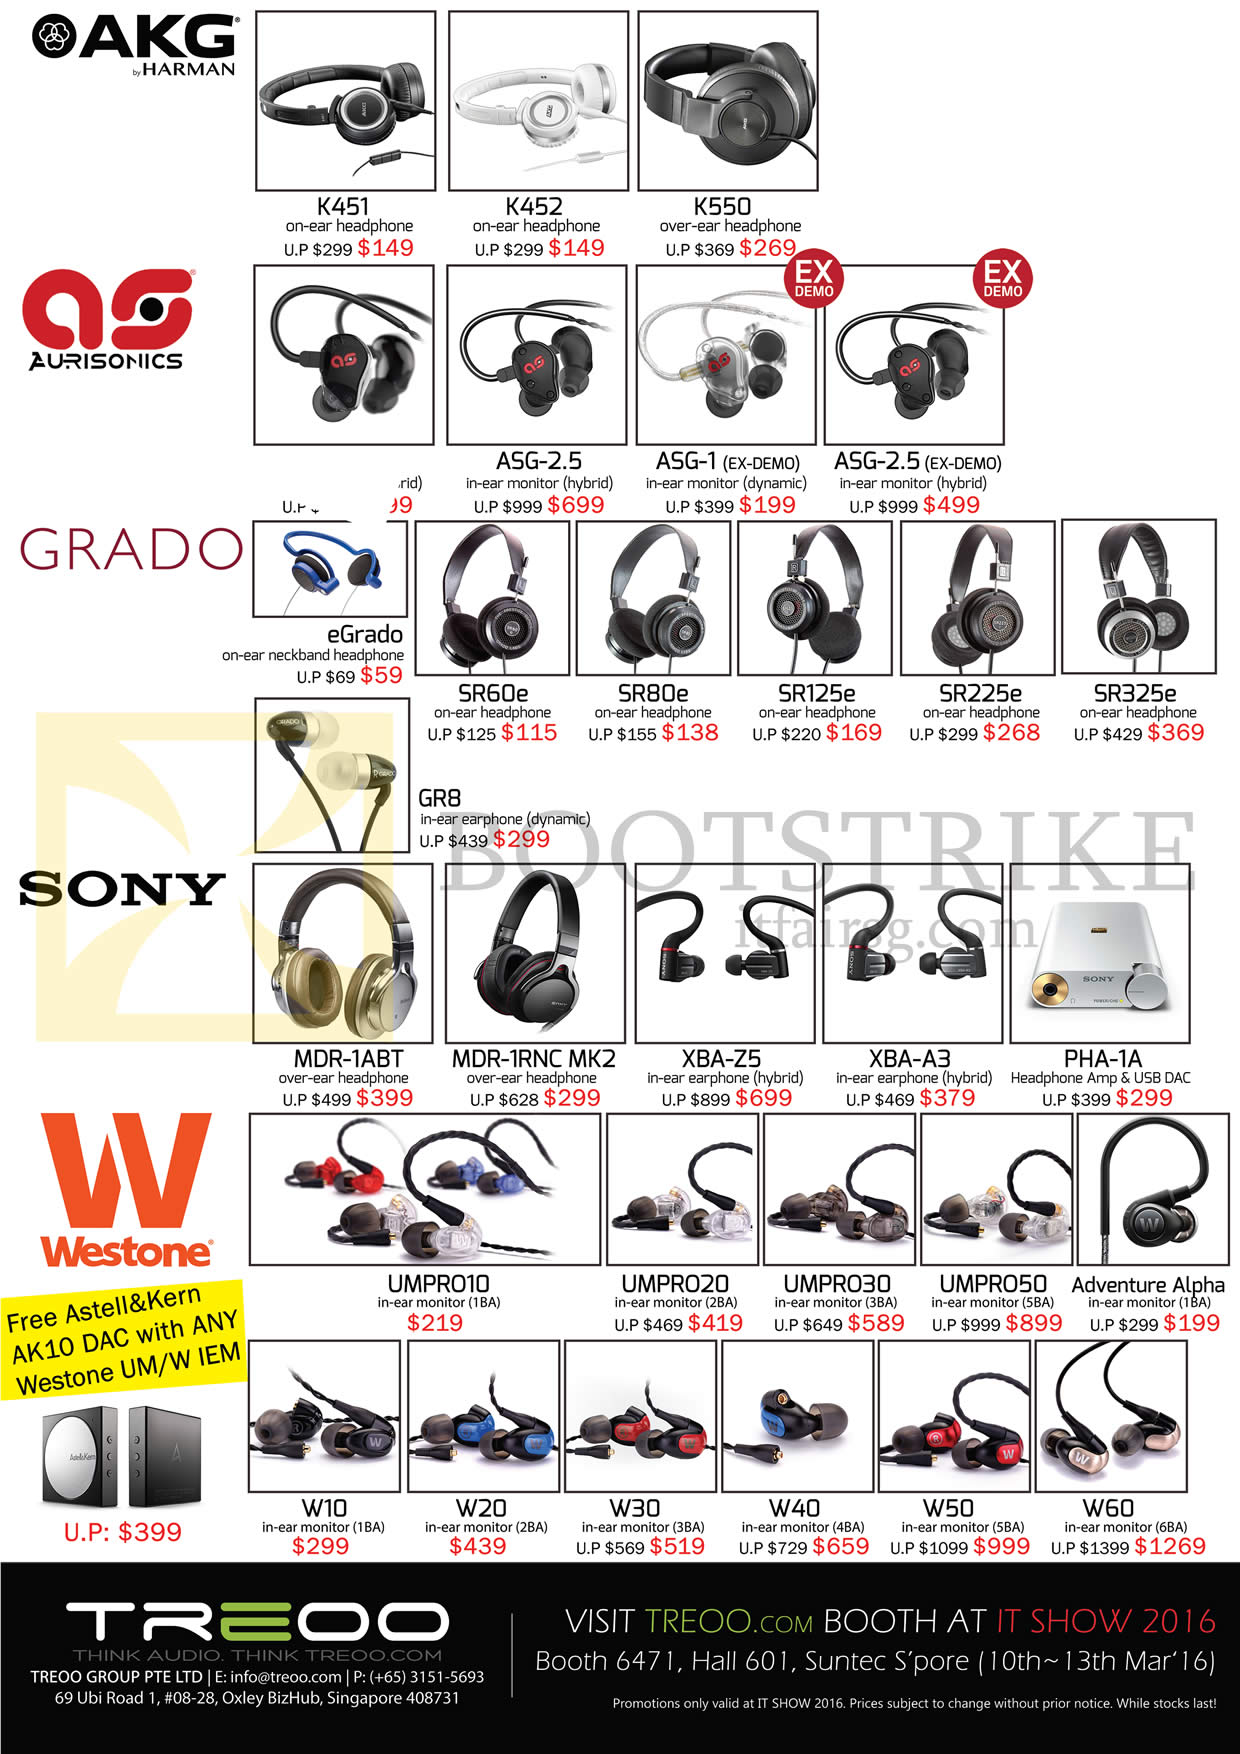 IT SHOW 2016 price list image brochure of Treoo Headphones, Earphones, AKG, Aurosonics, Grado, Sony, Westone, K451, K452, ASG-2.5, 1, EGrado, SR60e, 80e, MDR-1ABT, 1RNC MK2, UMPRO10